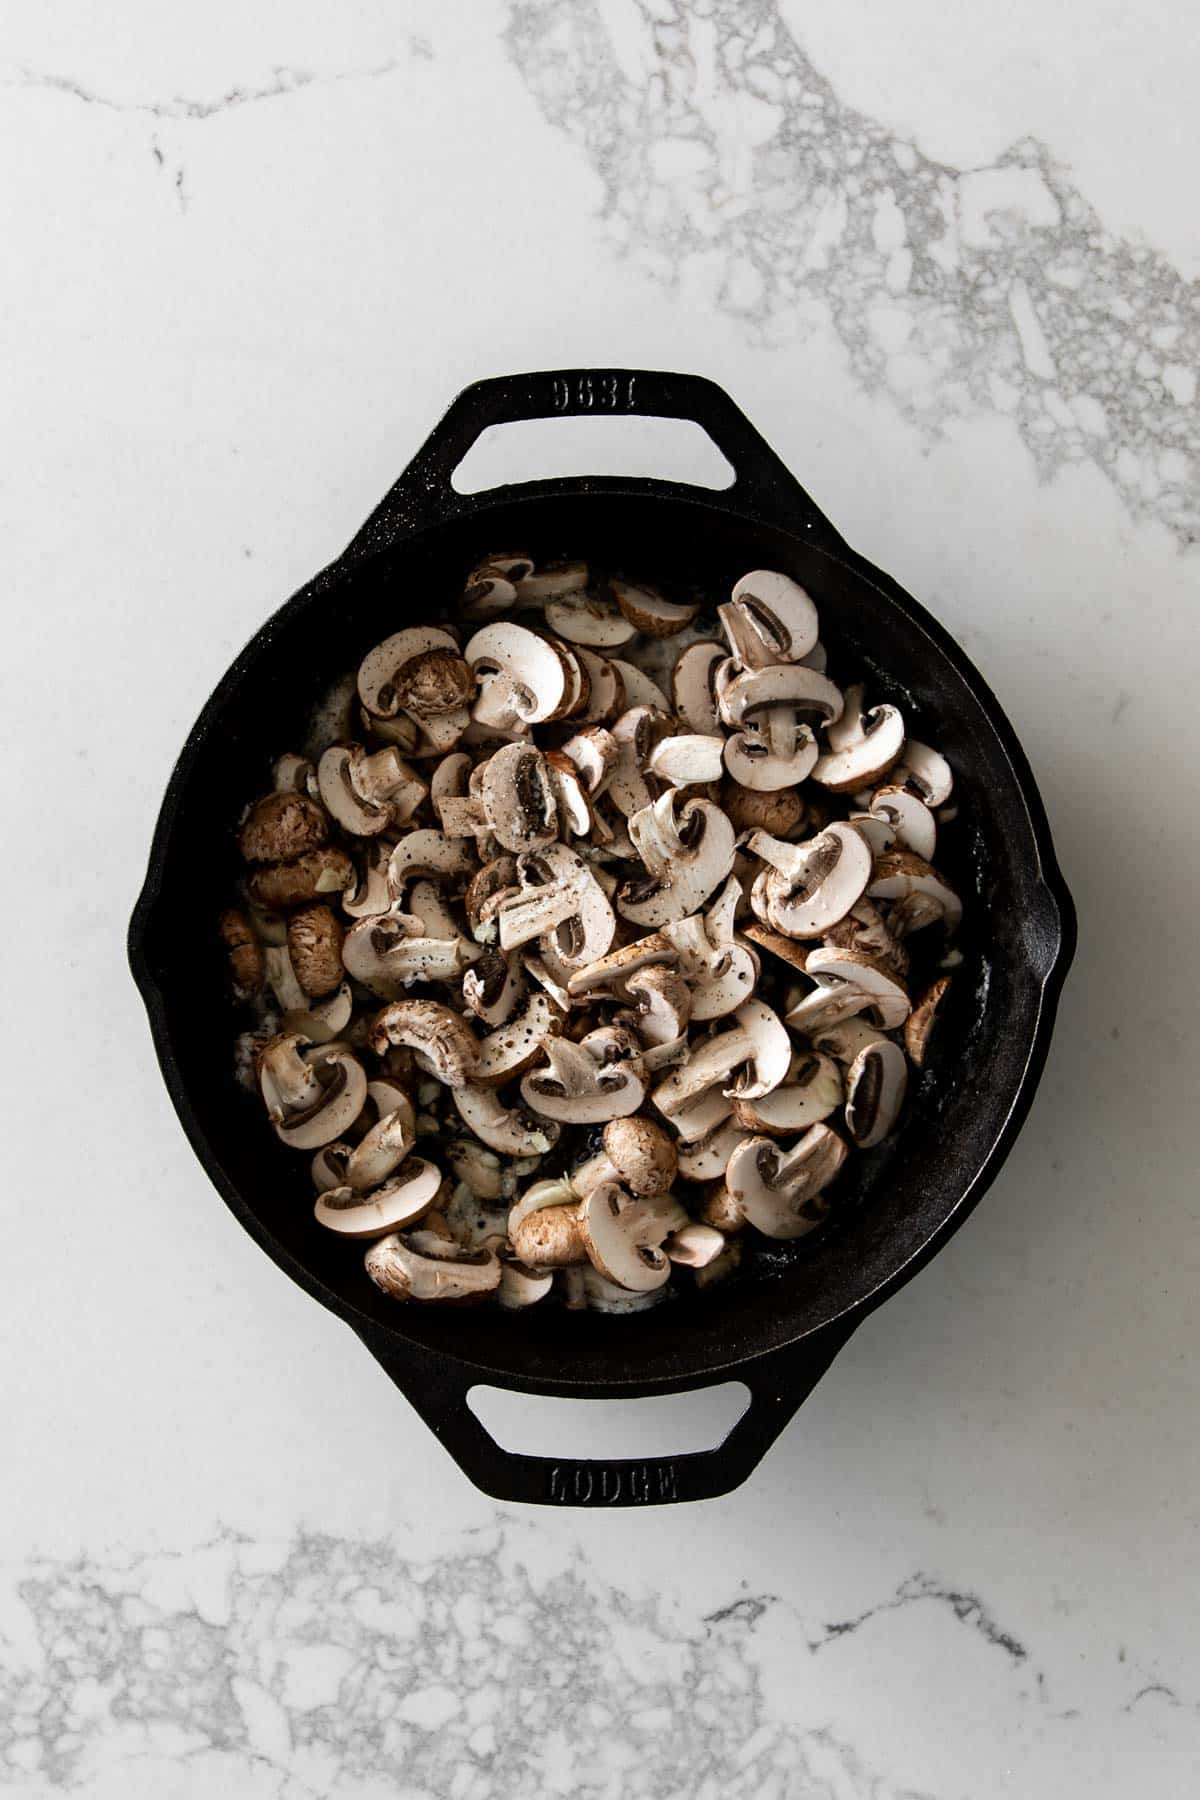 Mushrooms in a black cast iron skillet